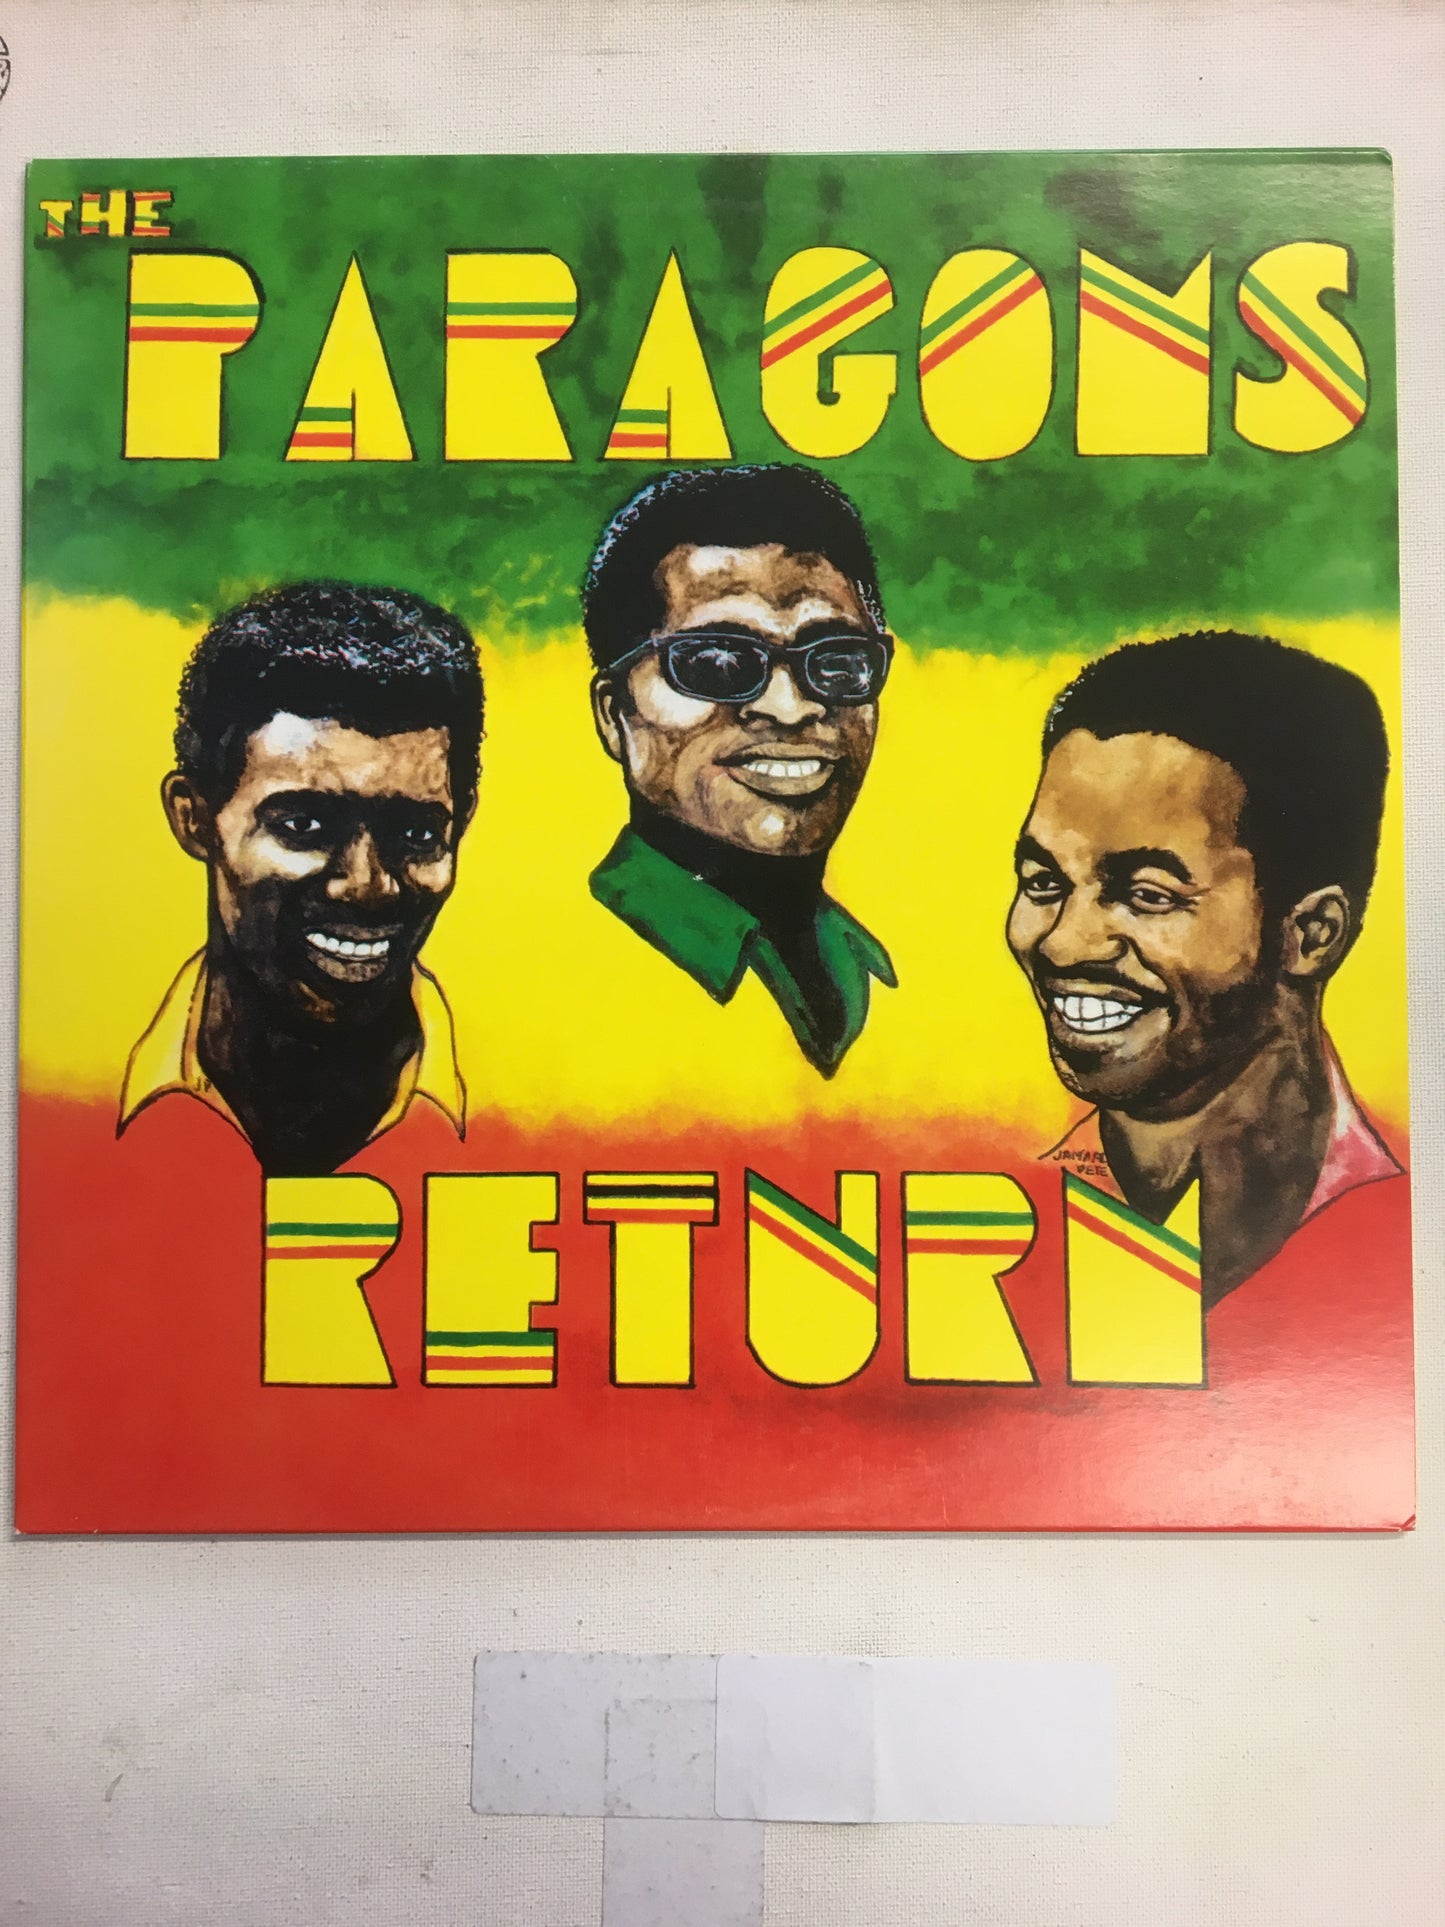 The PARAGONS LP “RETURN”